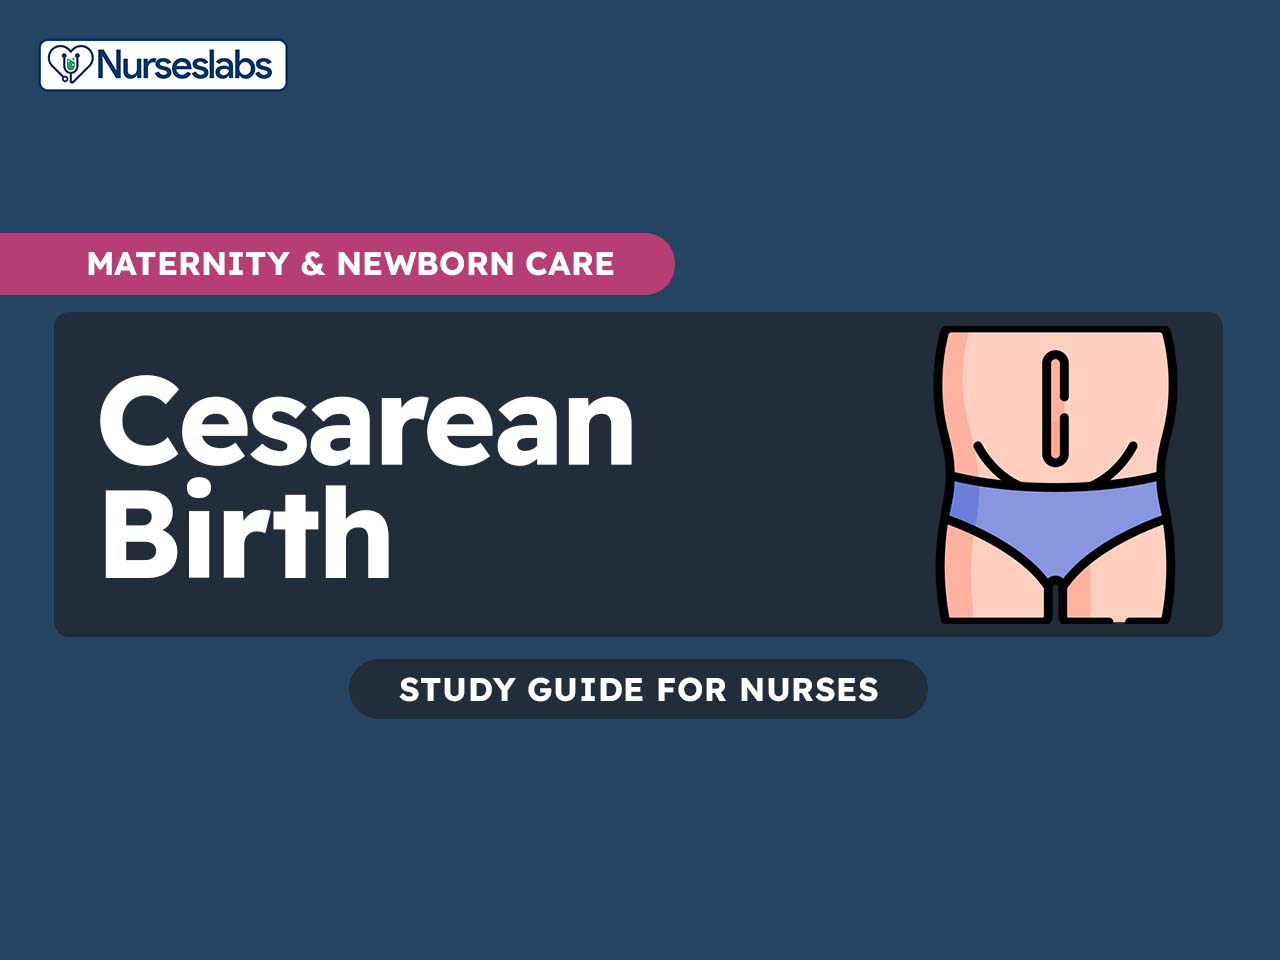 Cesarean Birth (C-Section) Nursing Care and Management